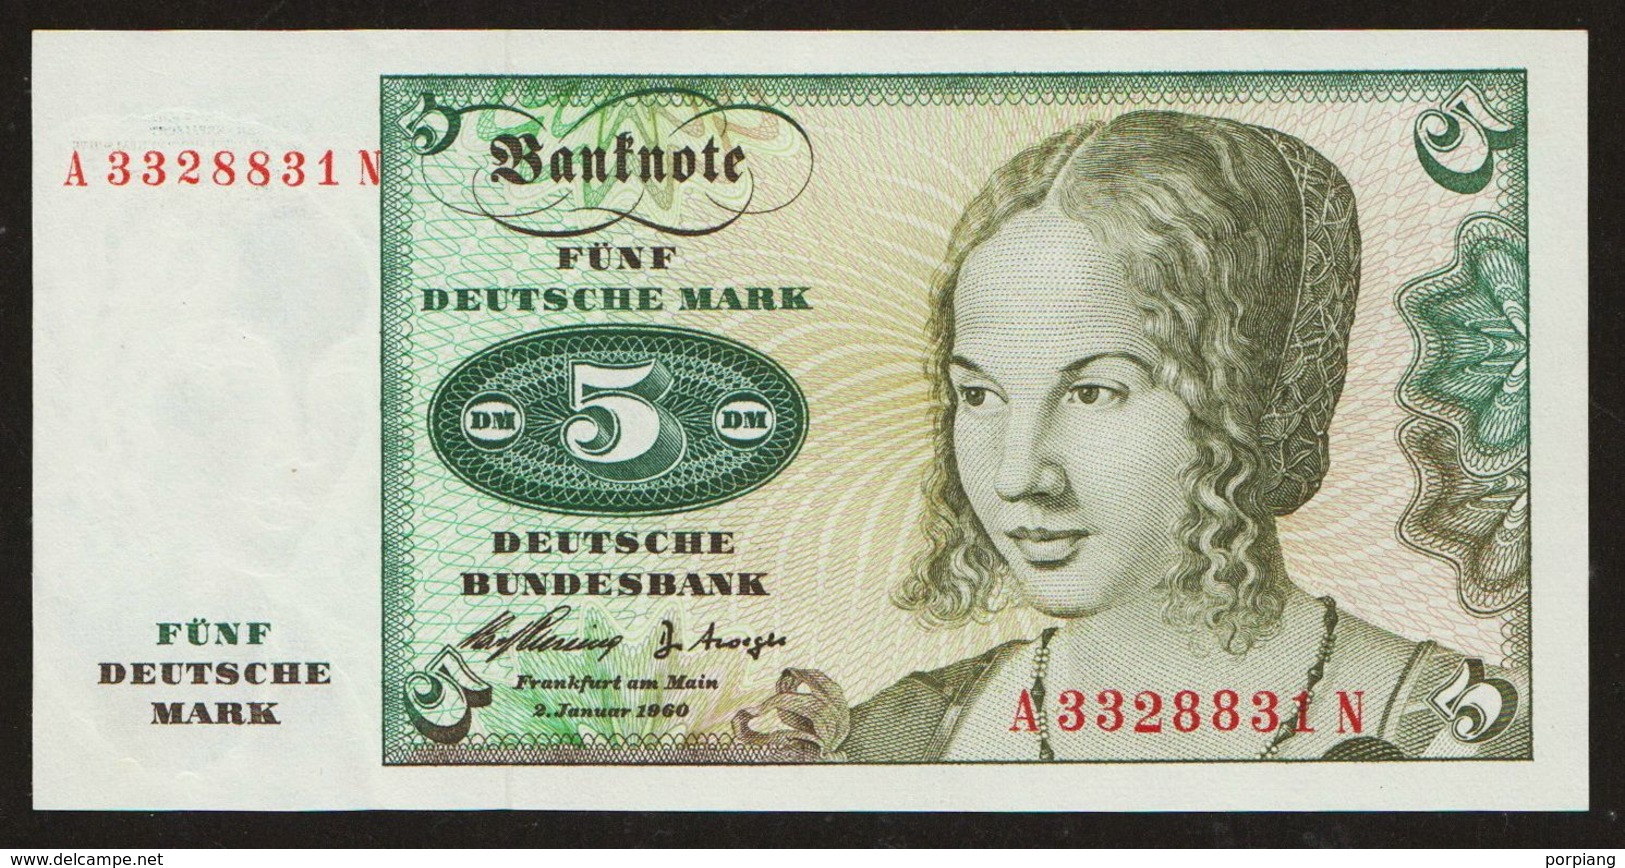 5 DM Deutsche Mark Germany 1960 XF+ - 20 Deutsche Mark